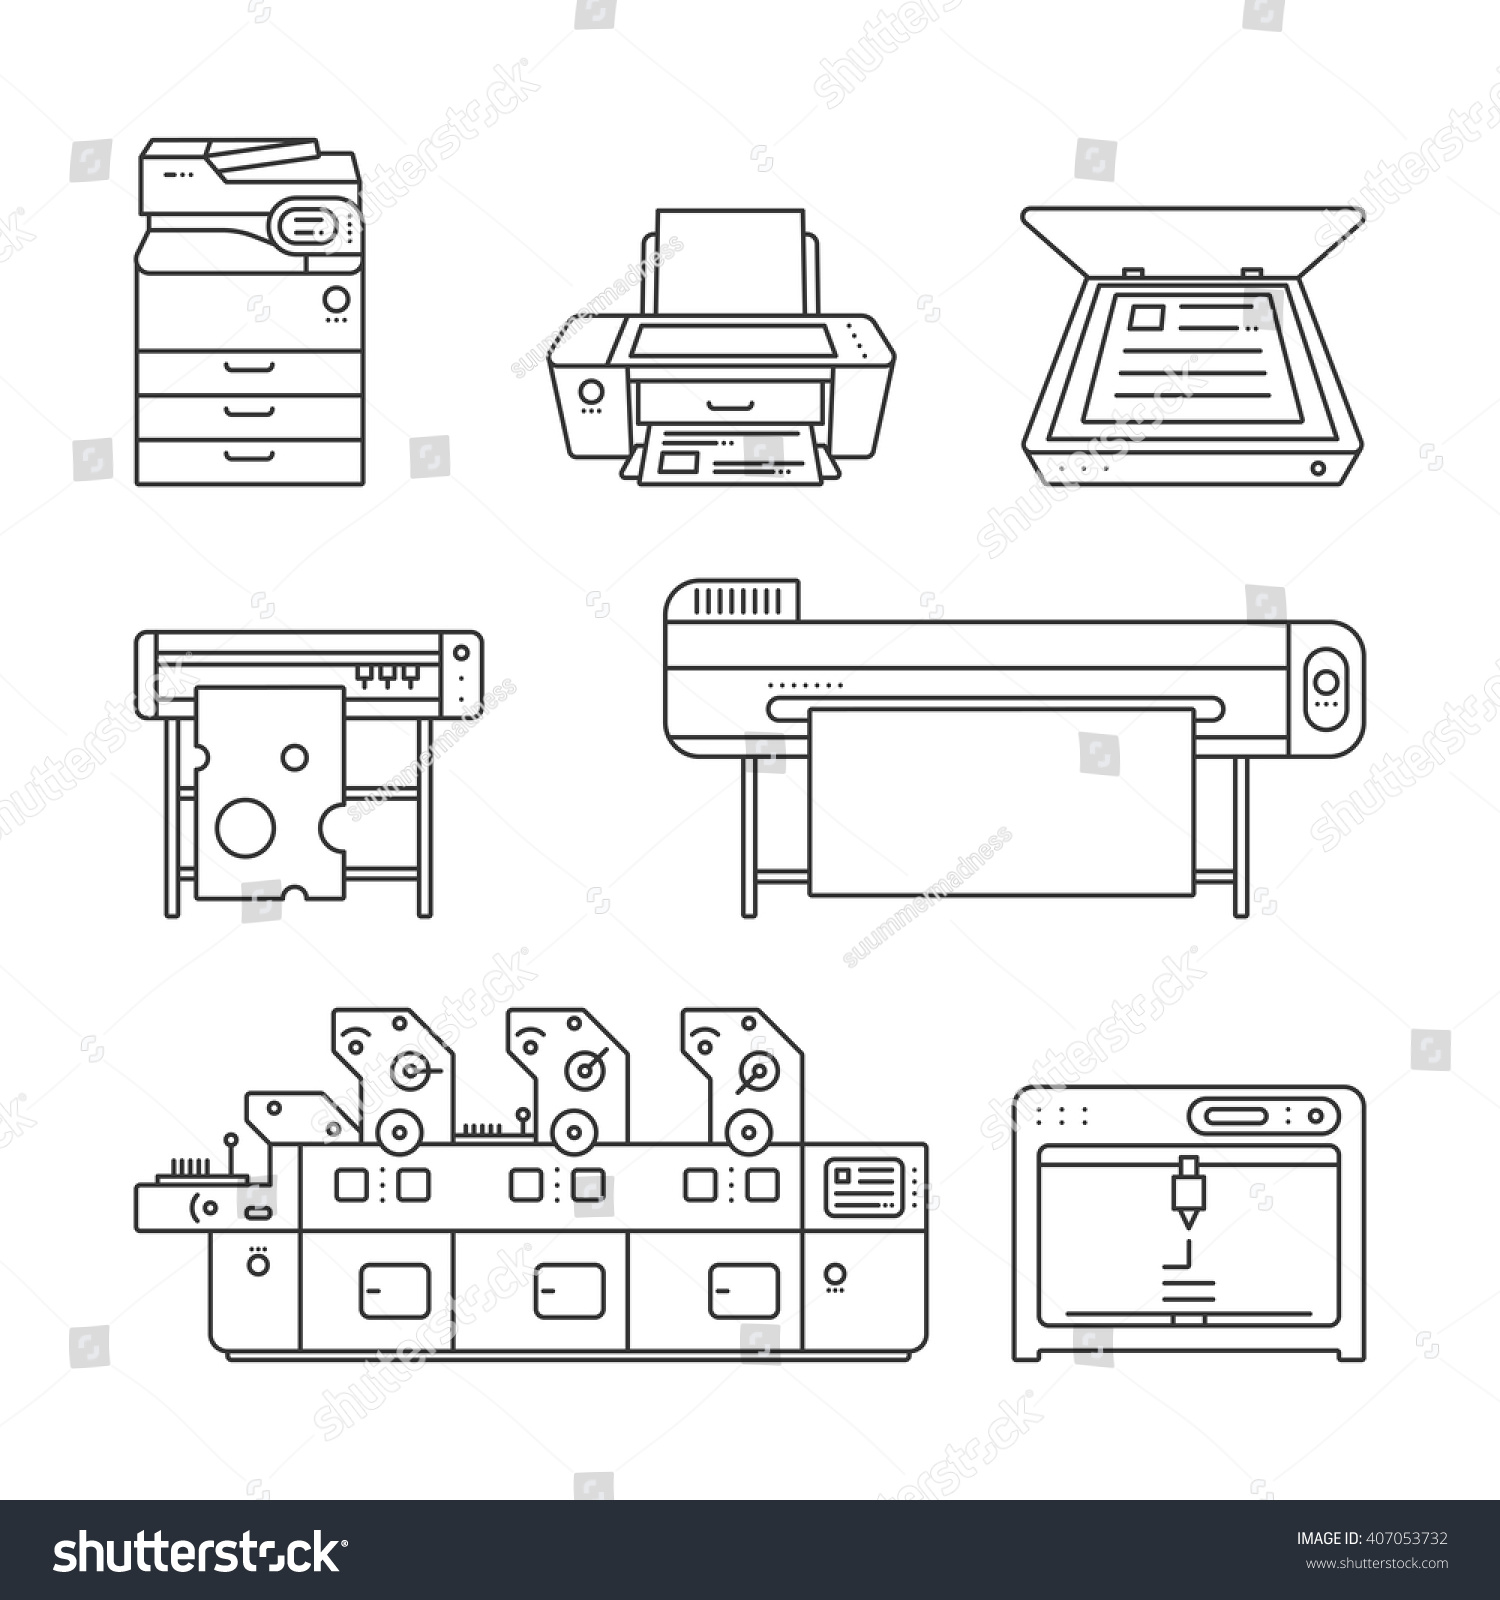 SVG of Collection of linear,flat Offset Printer,3D printer,Scanner,Laser printer,Plotter machine,Cutting plotter,InkJet printer,Copy Machine,photo,large format Printer.Vector illustration. Isolated on white svg